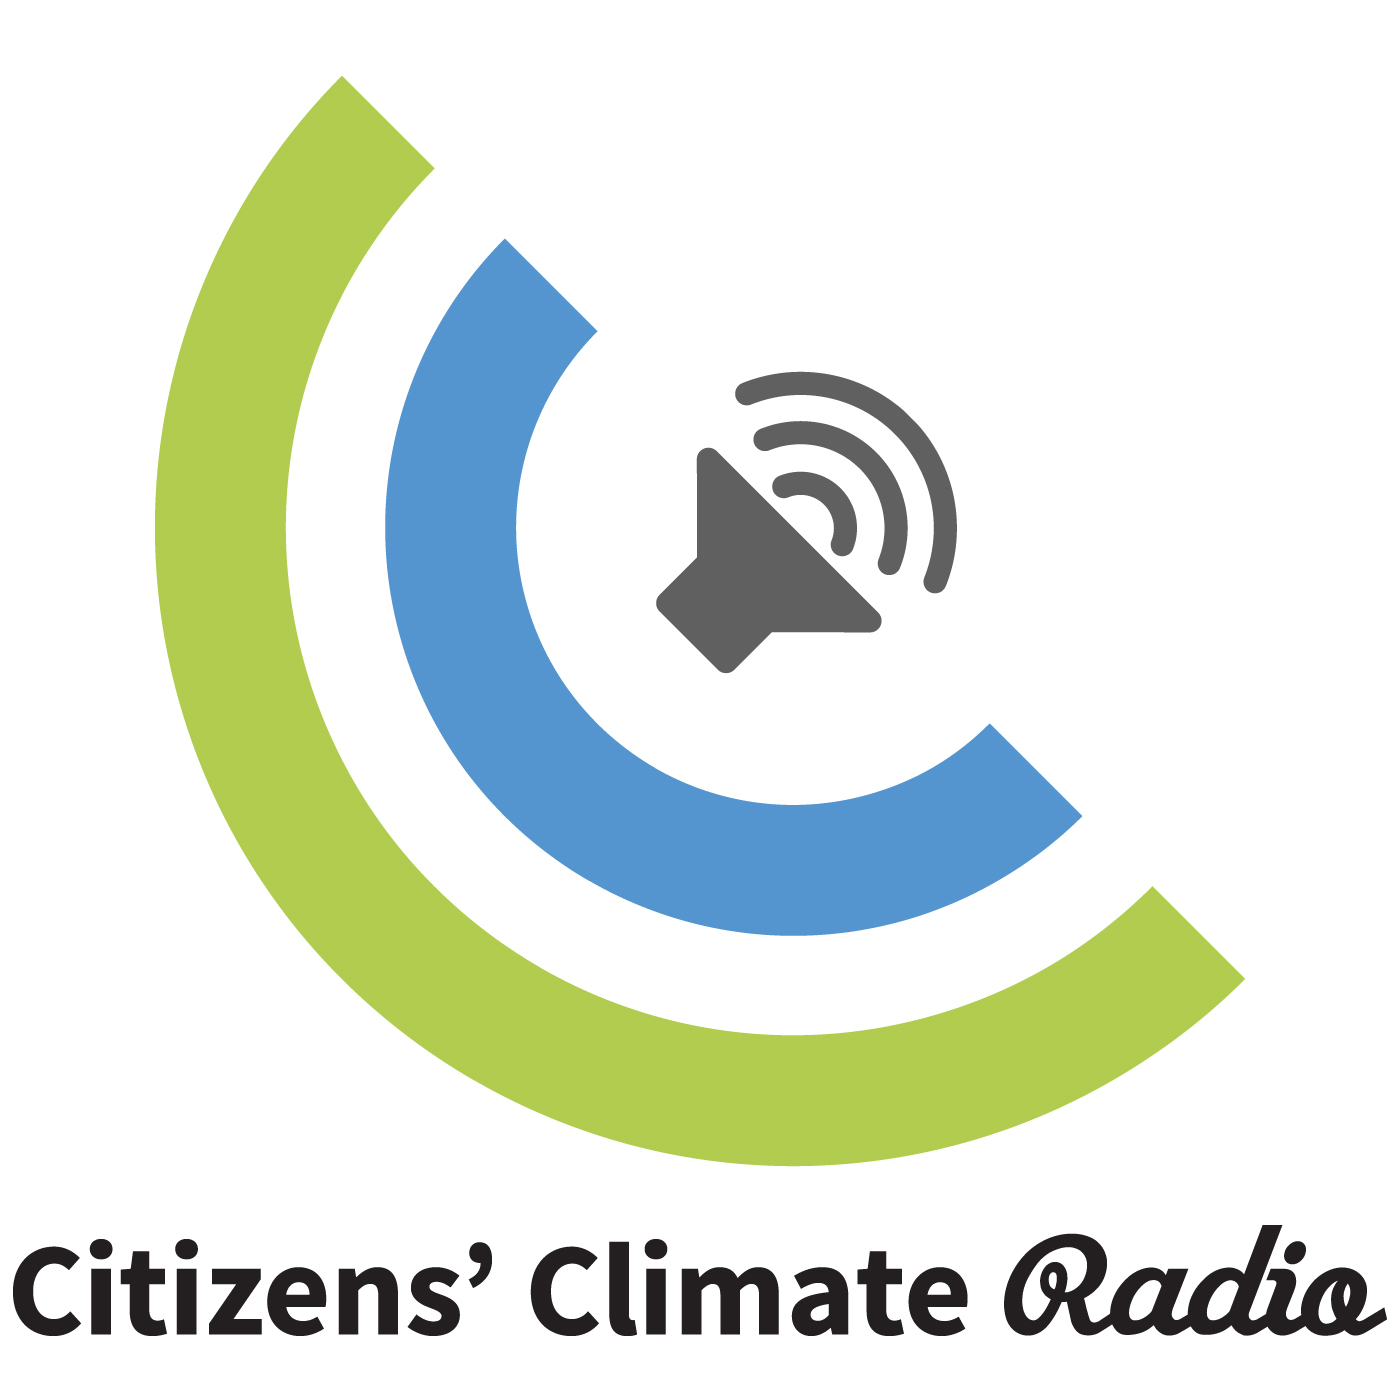 Citizens Climate Radio Ep 4  Dr. Katharine Hayhoe and Communication Myths